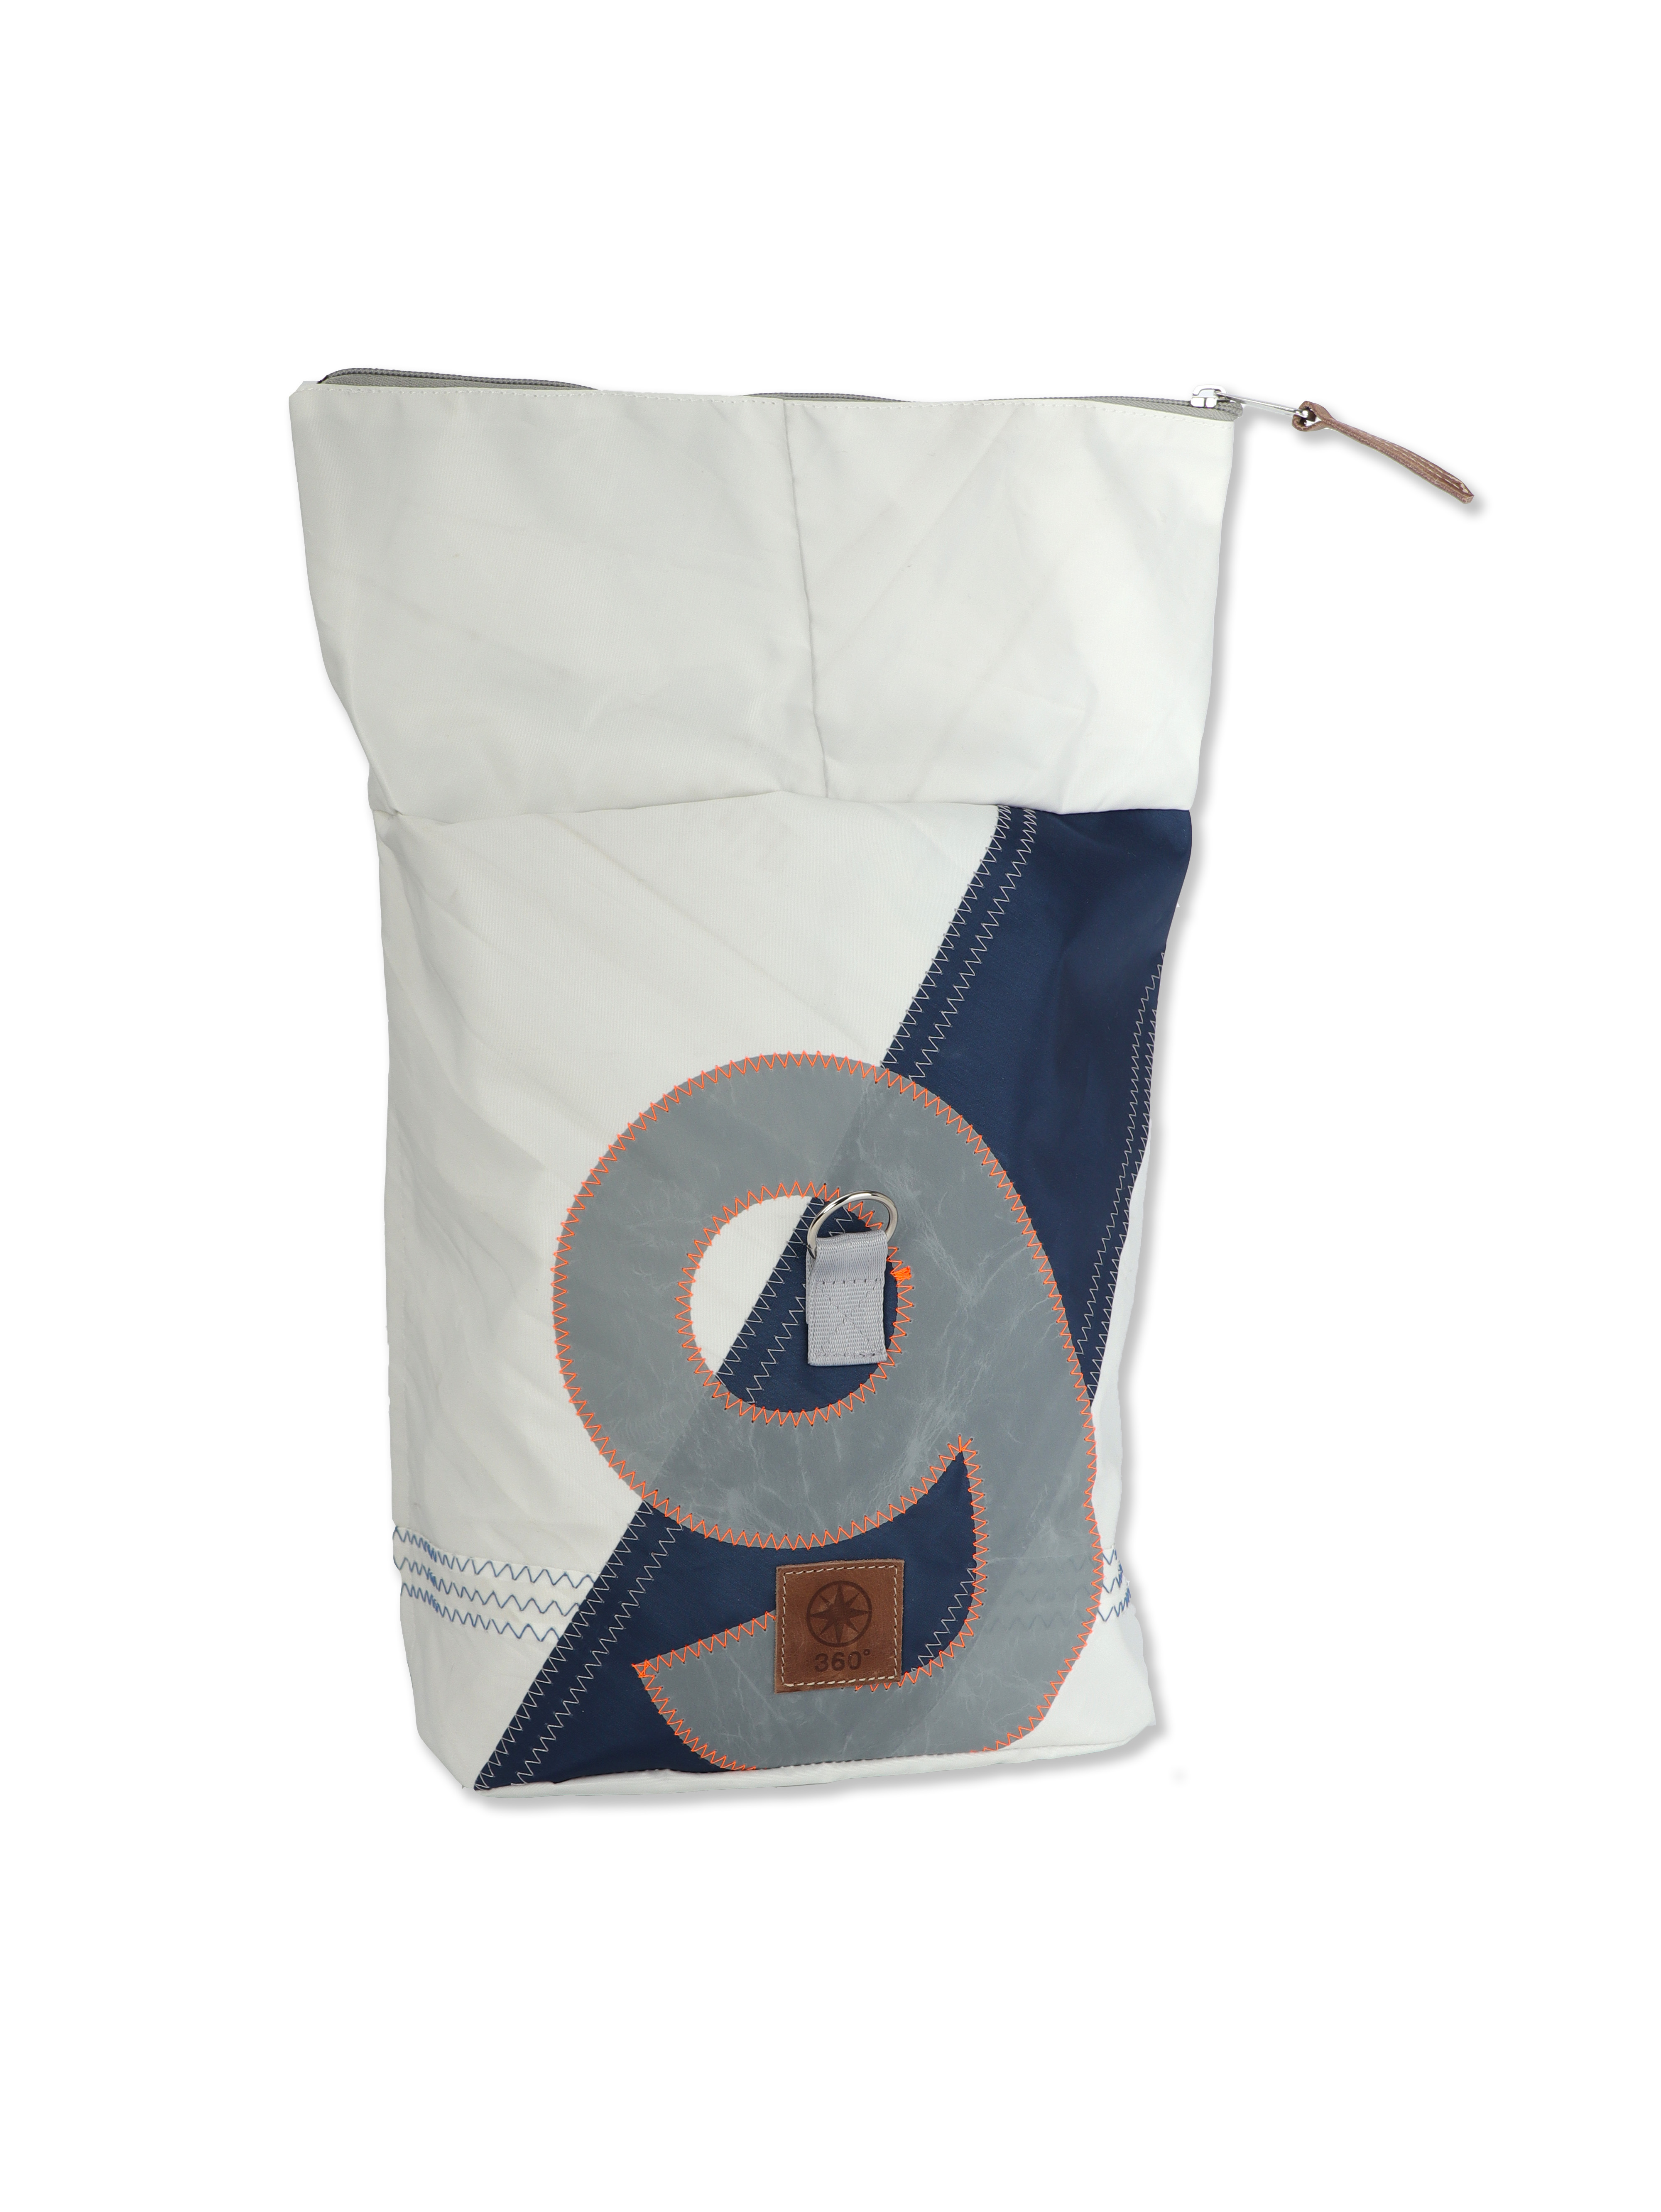 Möwe stylish maritime backpack